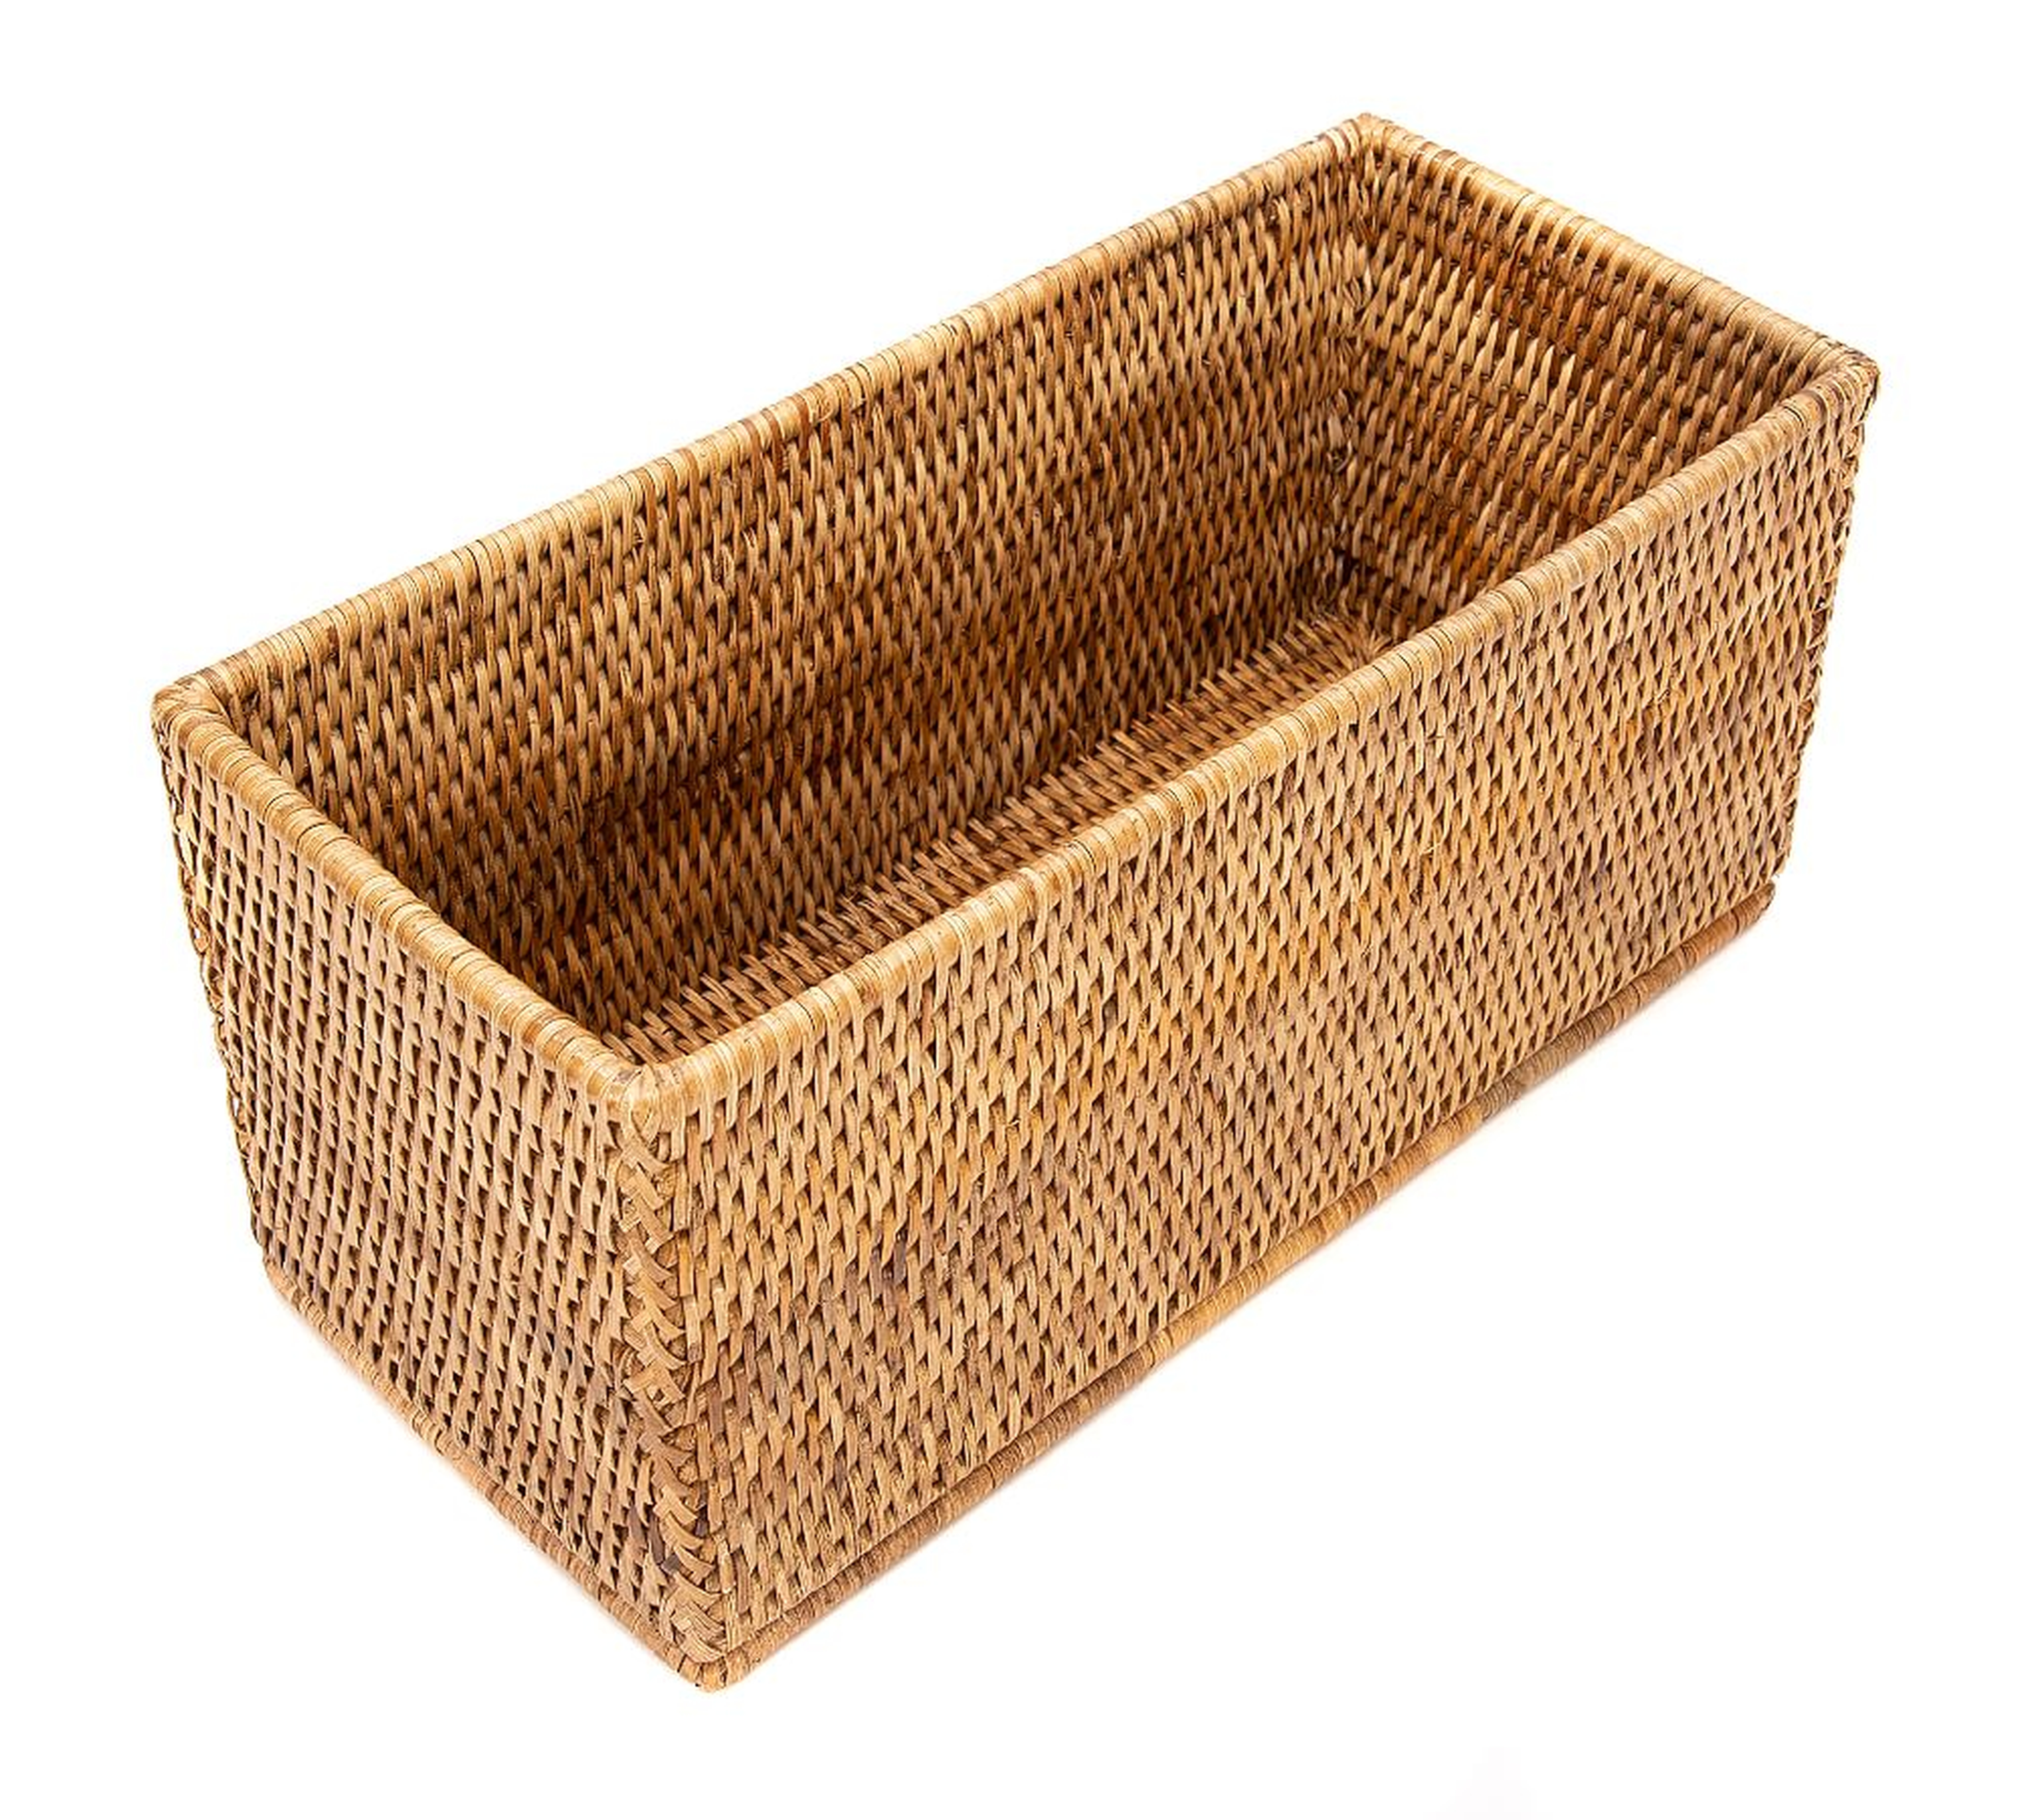 Tava Handwoven Rattan Rectangular Everything Basket, Natural - Pottery Barn